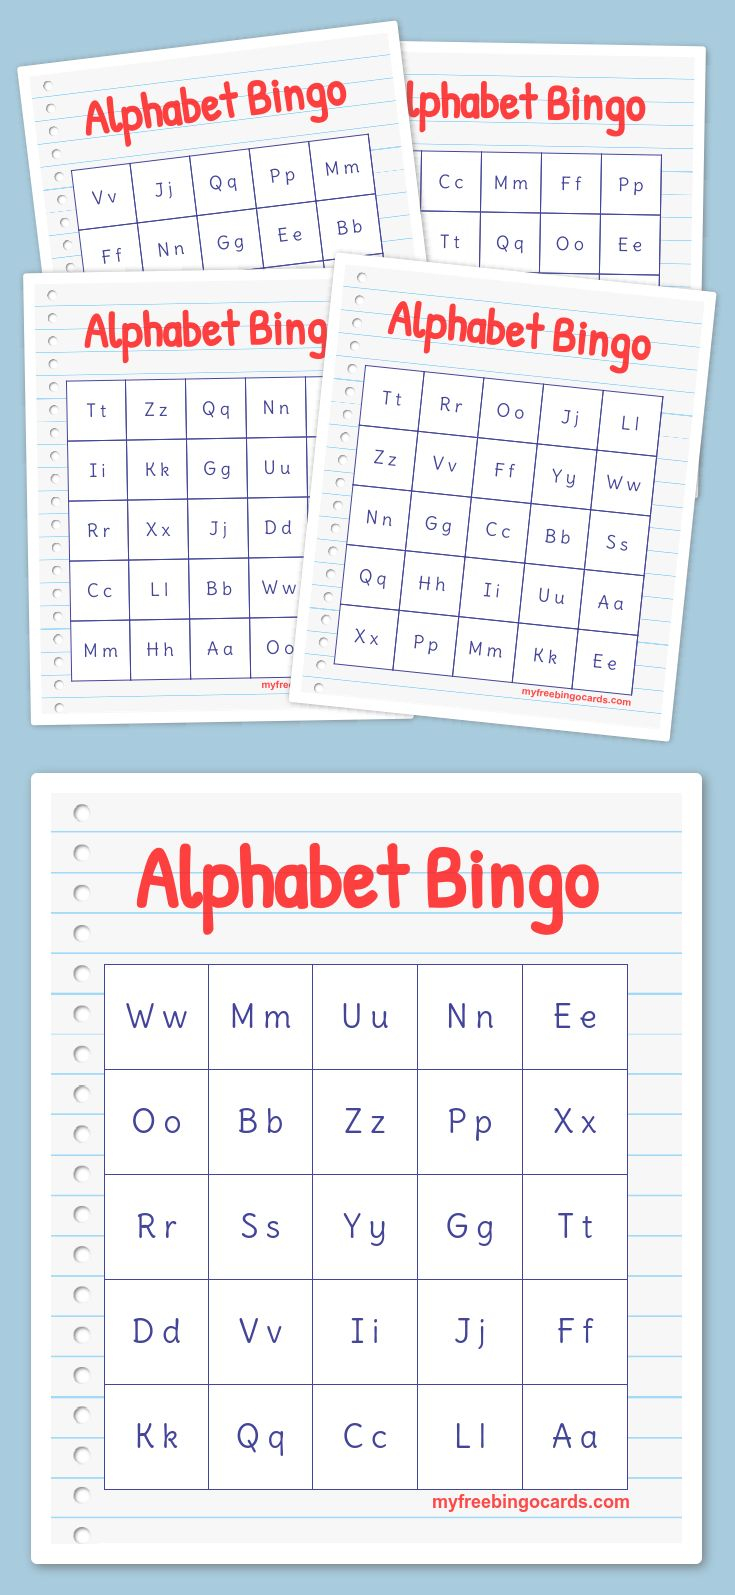 Make Your Own Free Bingo Cards At Myfreebingocards 